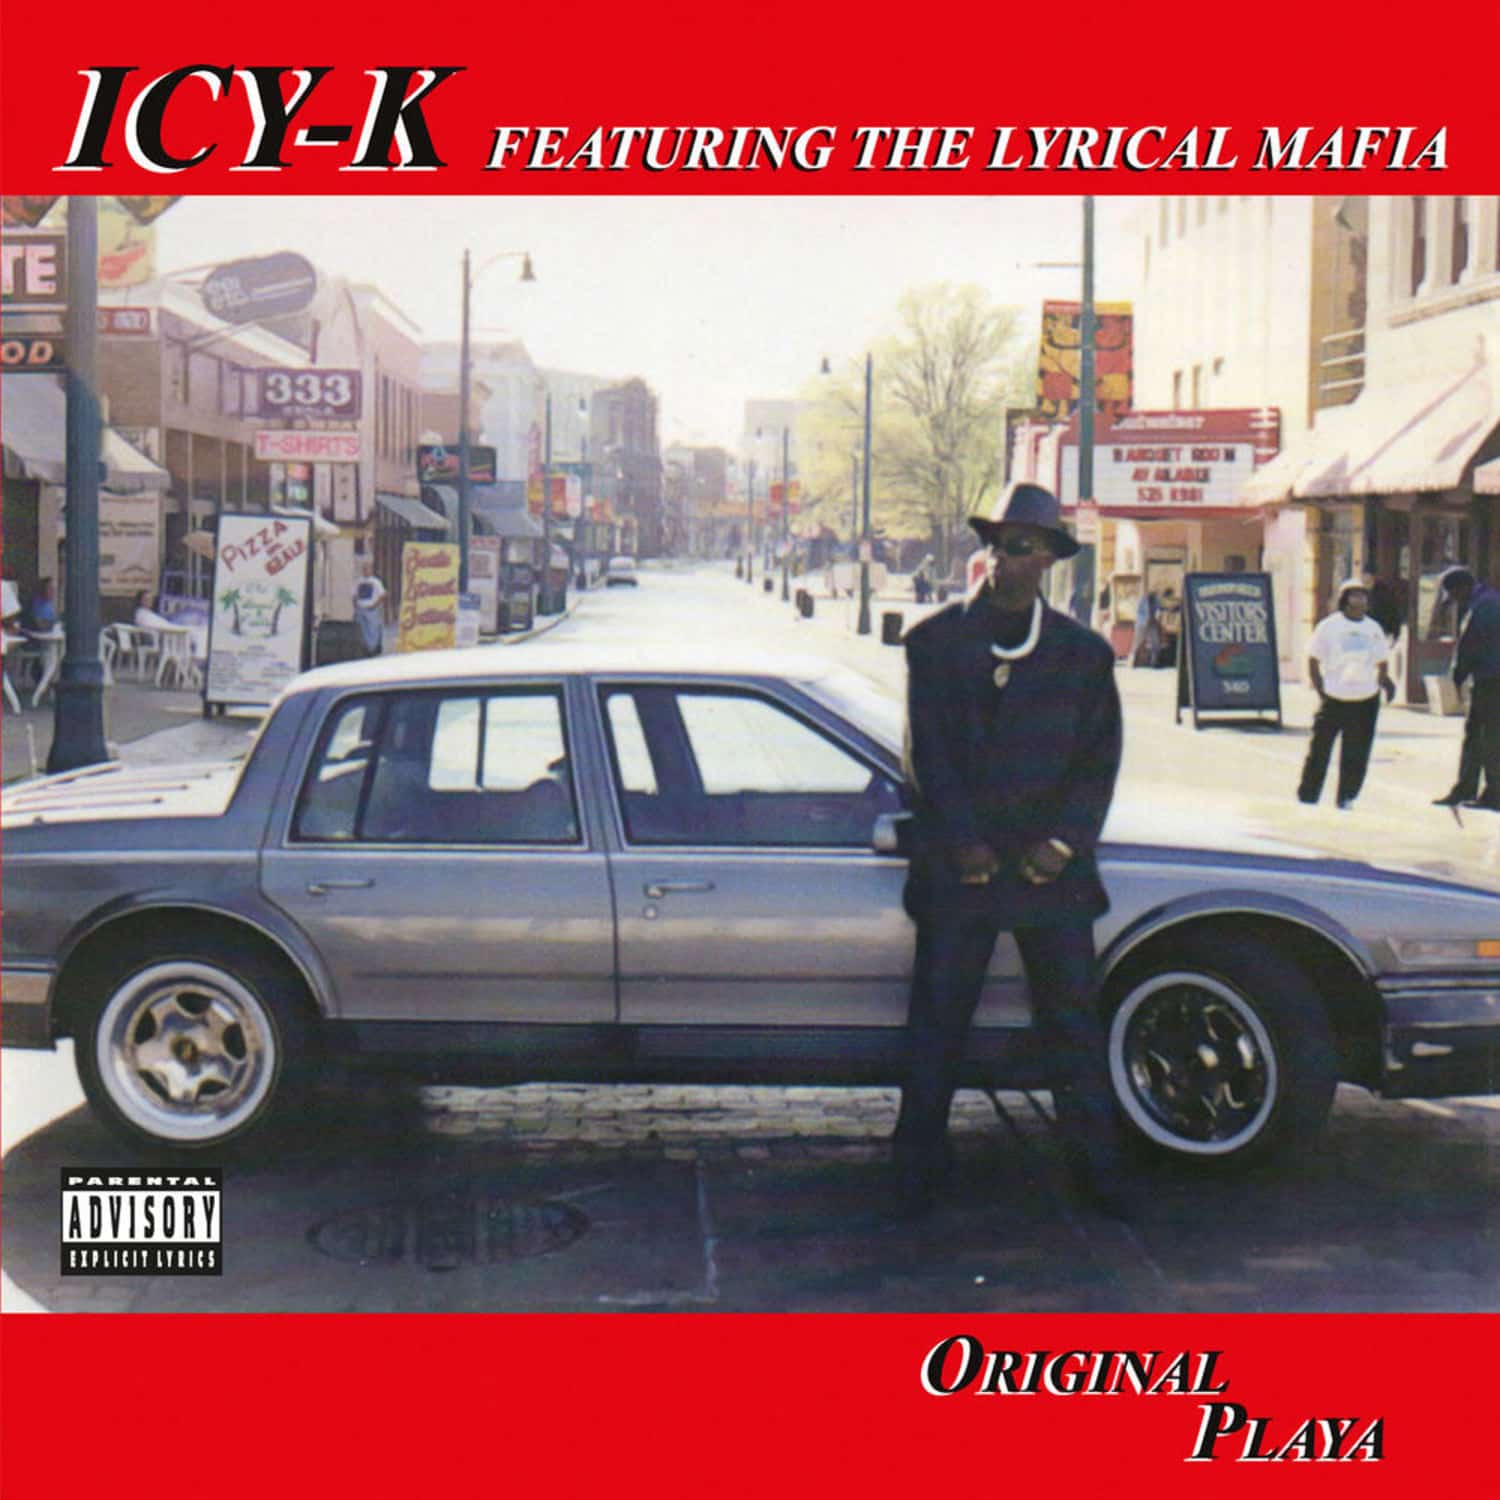 Icy-K feat. The lyrical Mafia - ORIGINAL PLAYA 